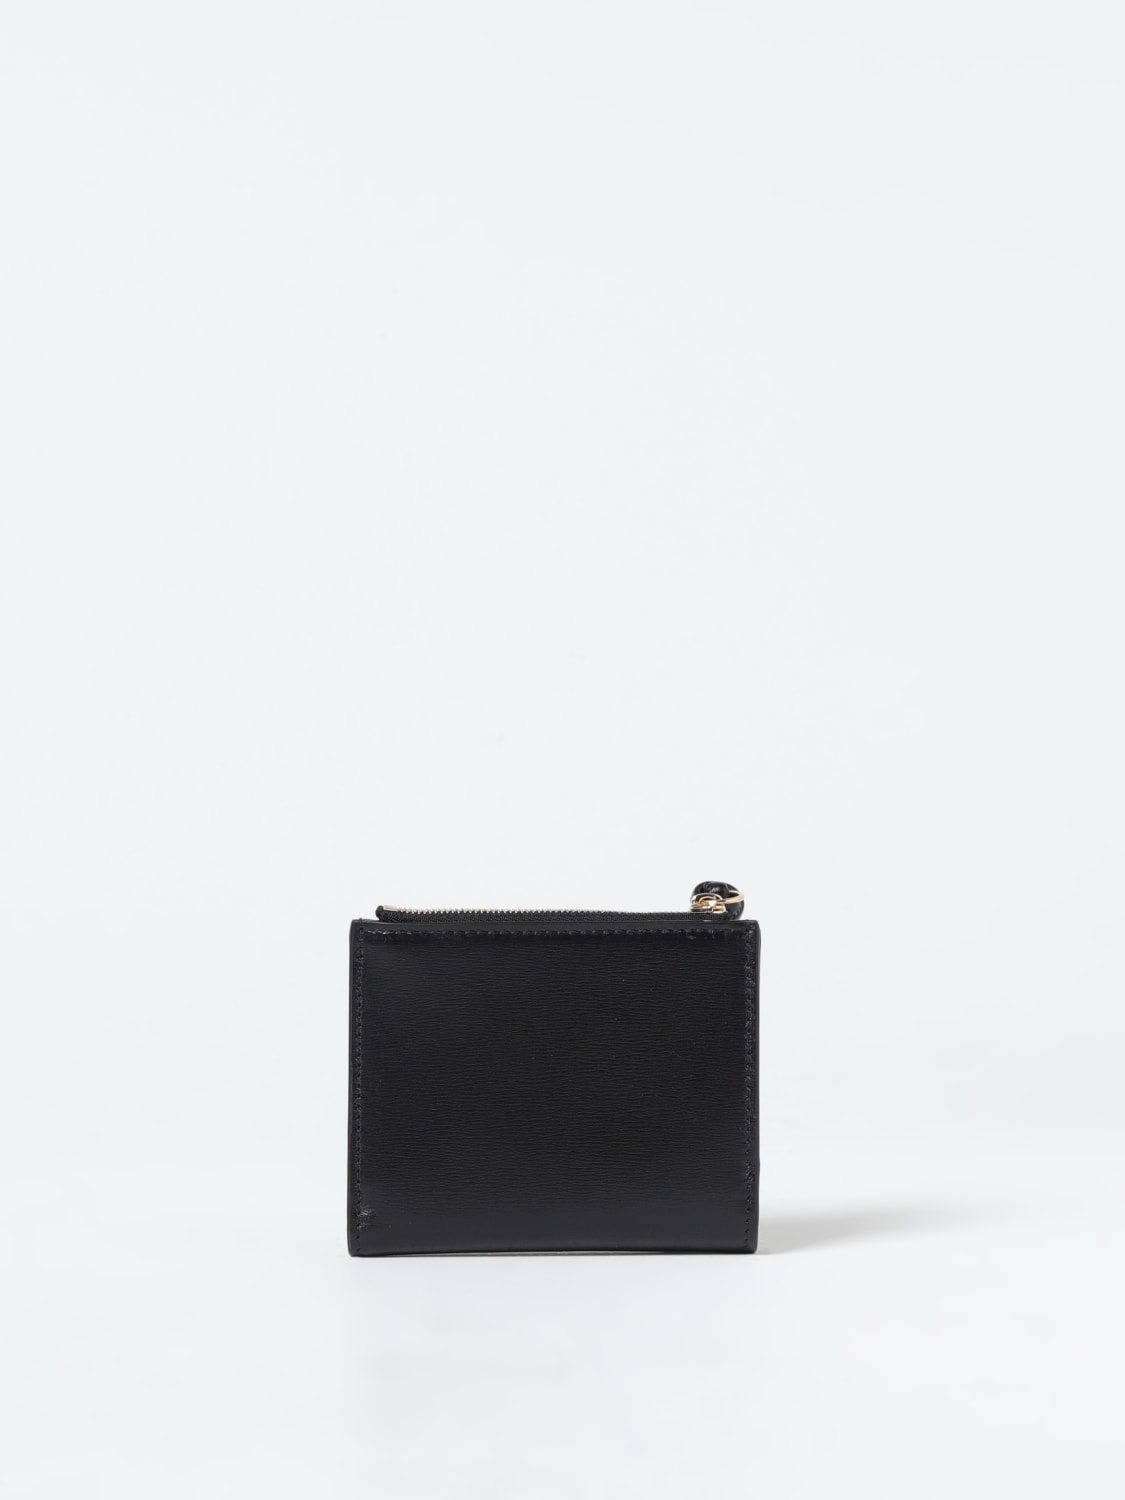 JIL SANDER: wallet for woman - Black | Jil Sander wallet